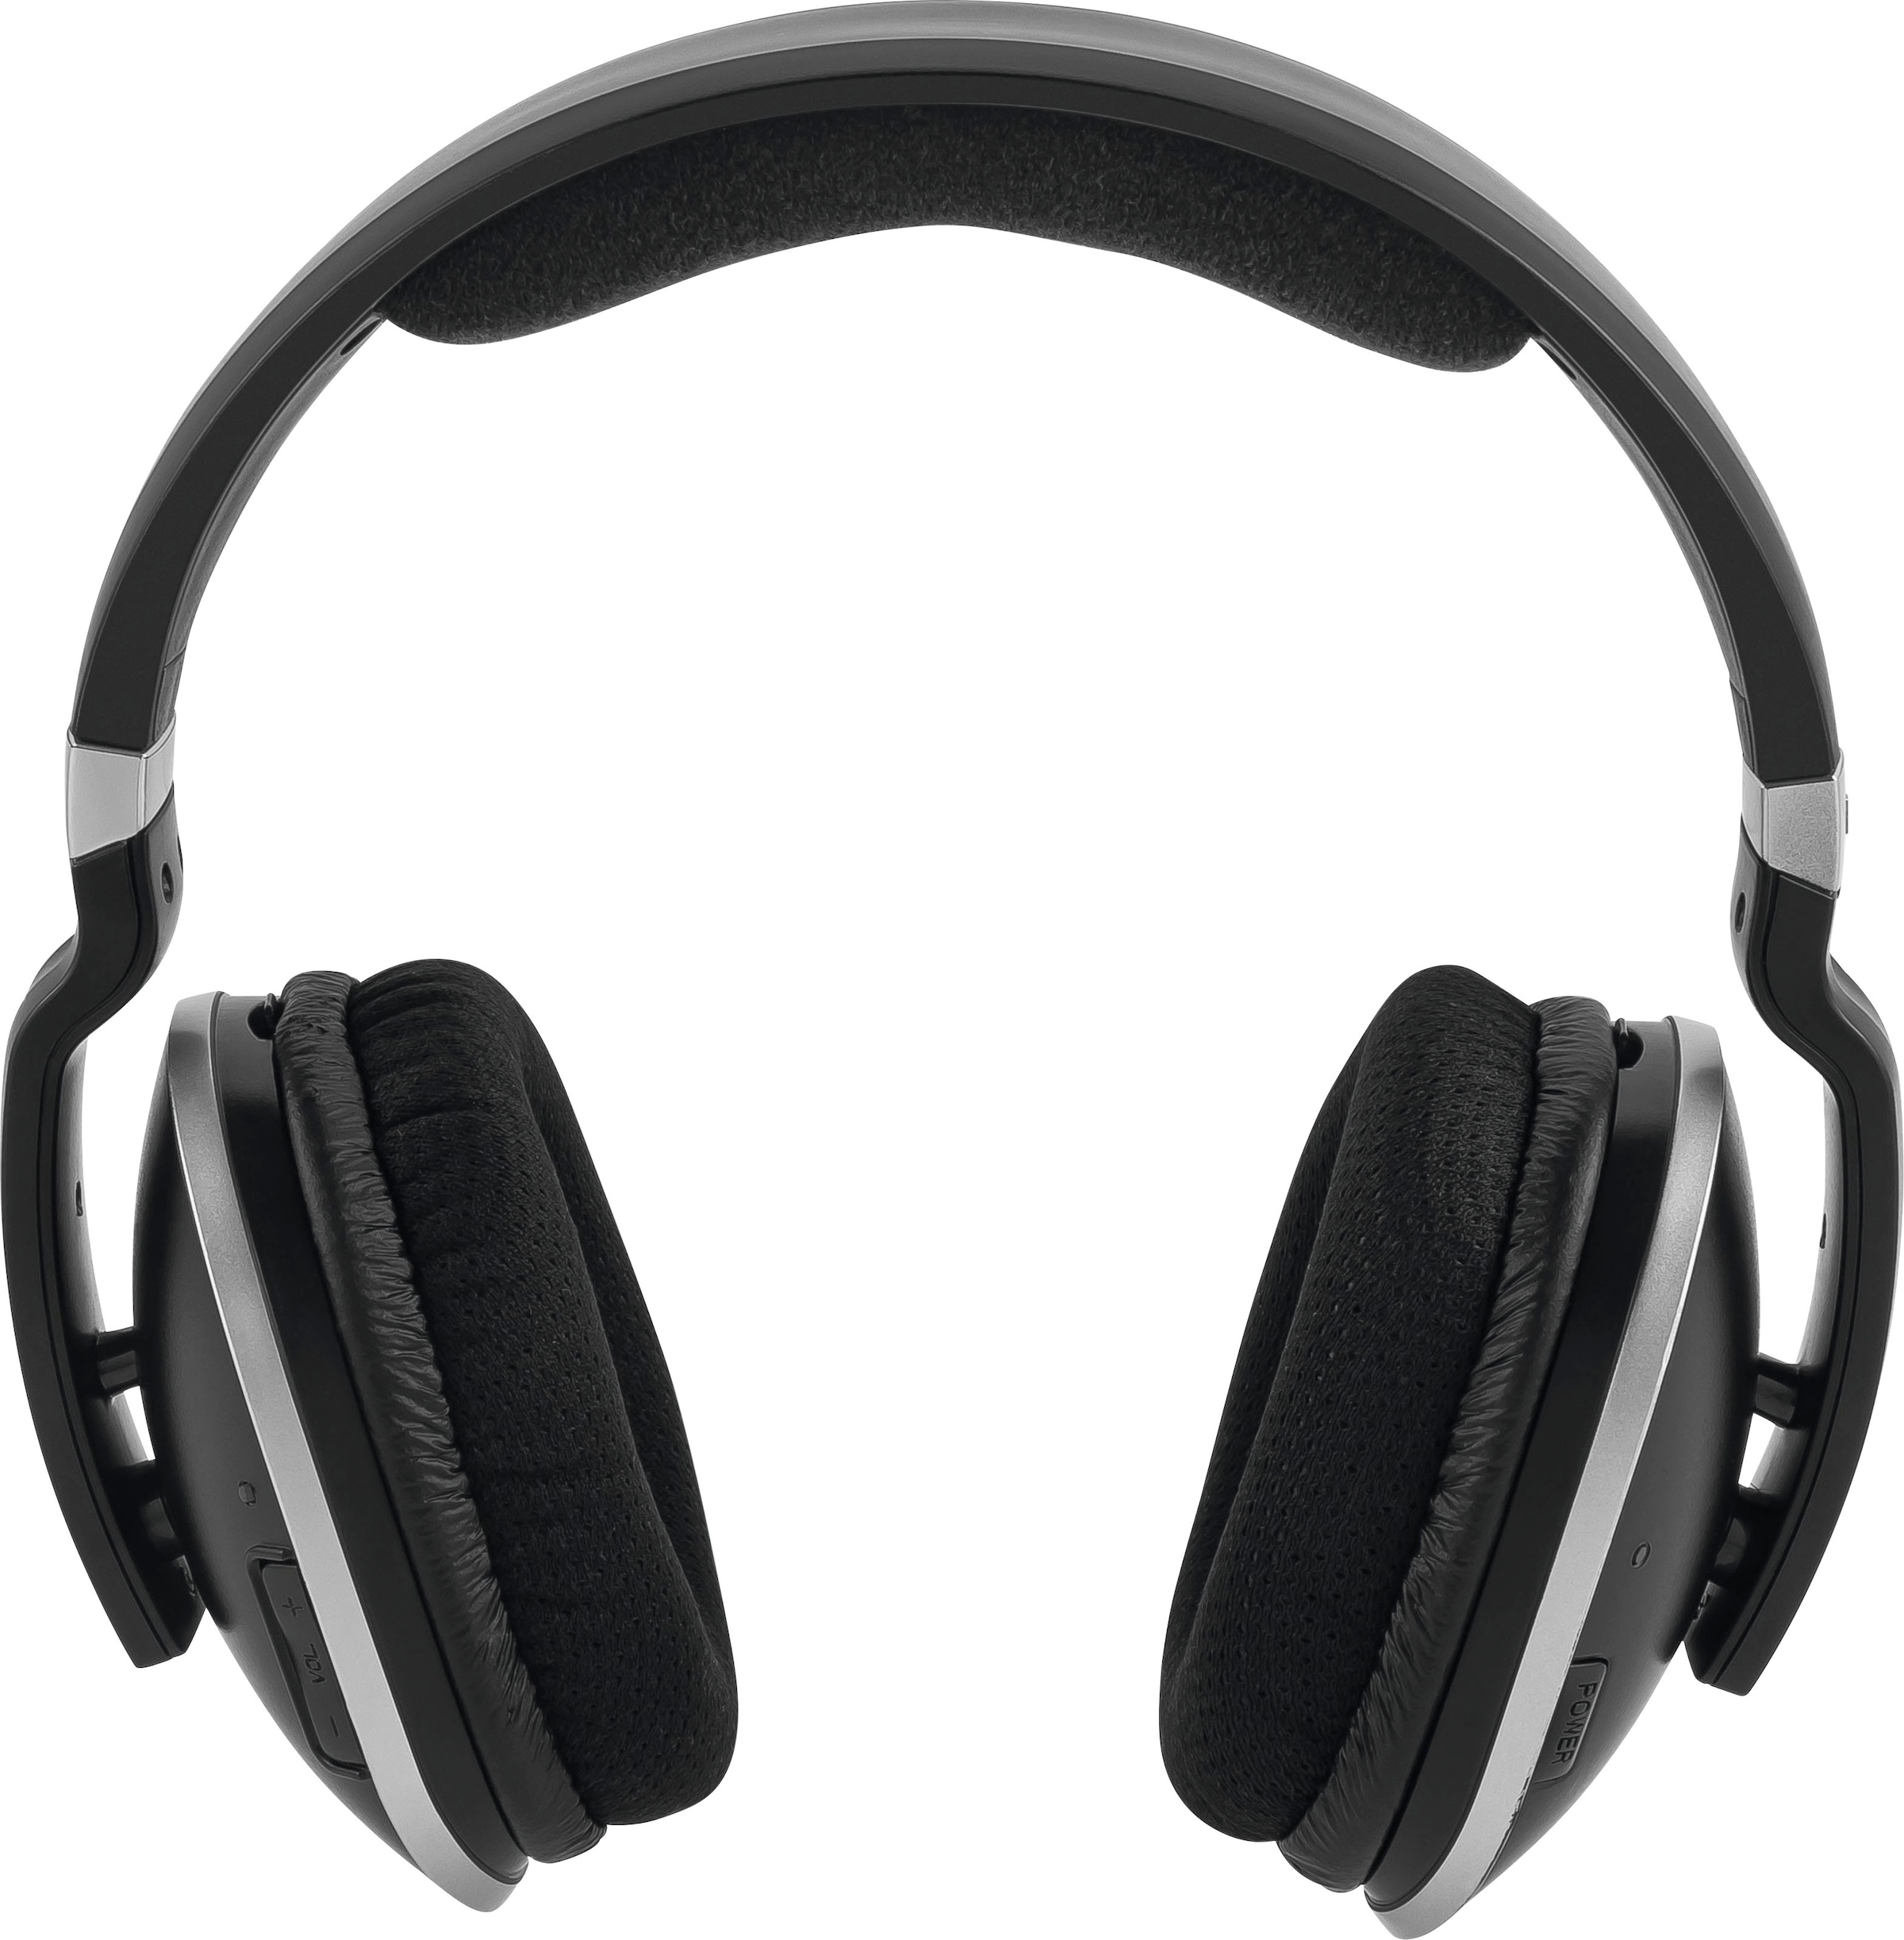 TechniSat Funk-Kopfhörer »STEREOMAN 2 DAB+«, Wireless jetzt online bei OTTO